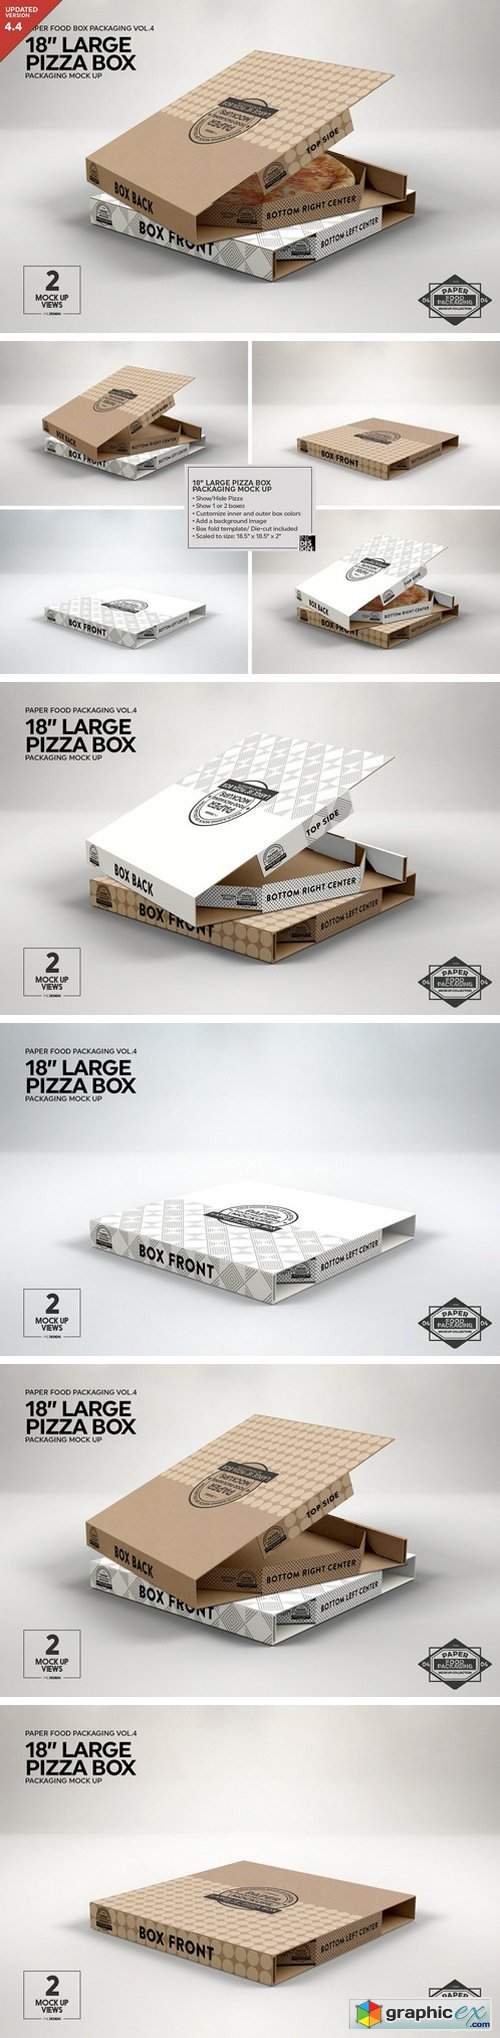 Large 18 Pizza Box Packaging Mockup